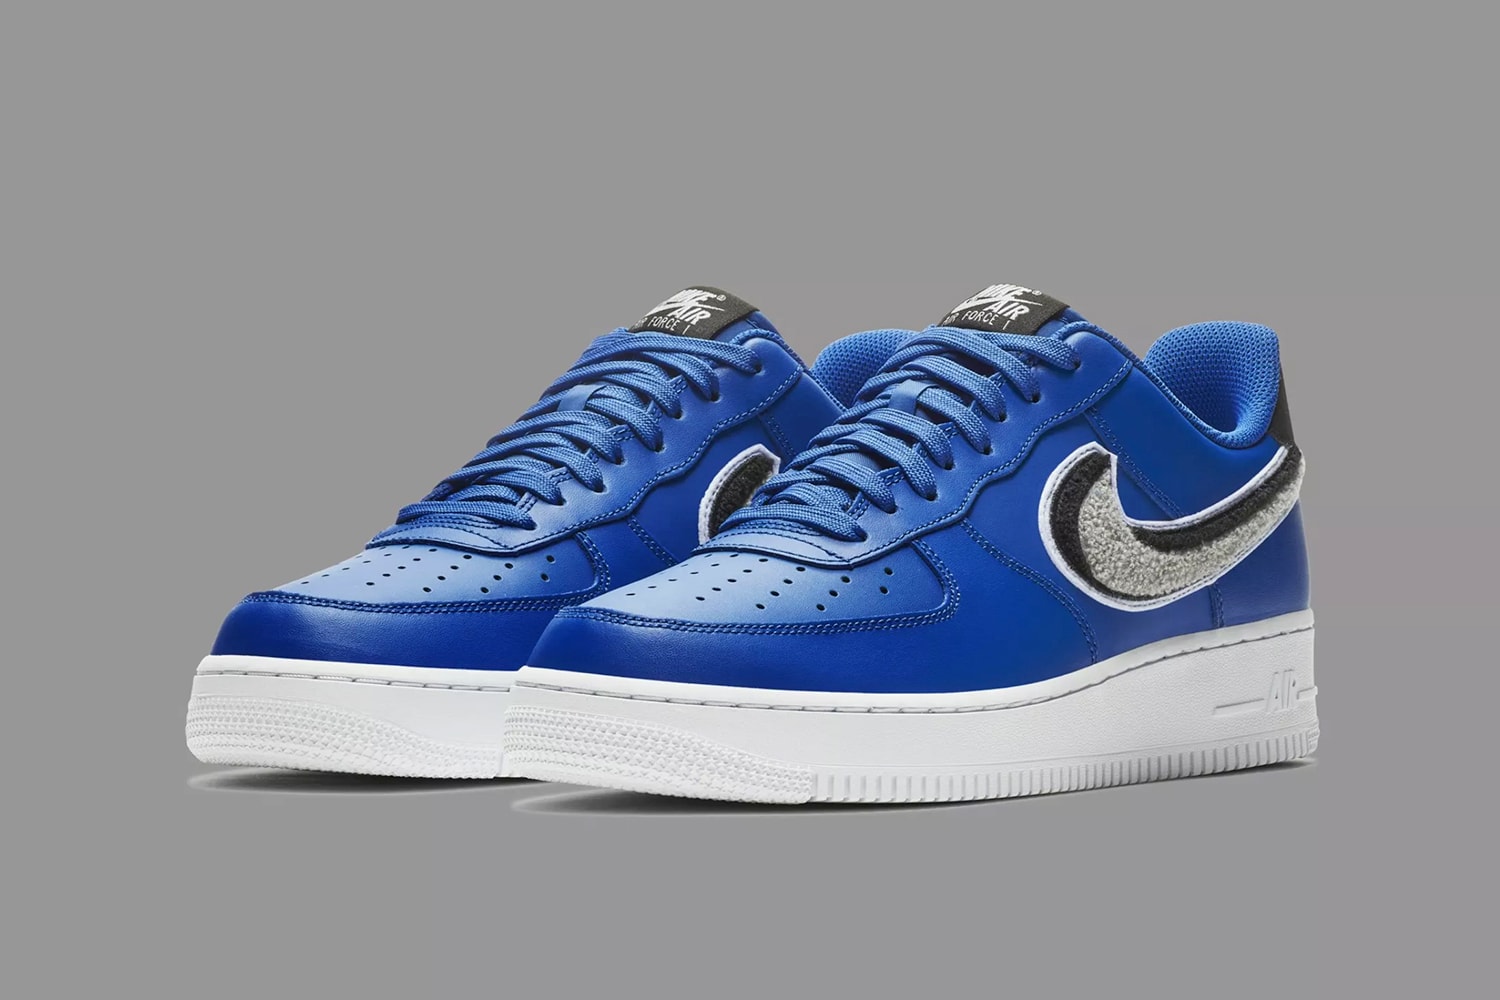 Nike Air Force 1 Low 3D Chenille Swoosh blue black grey sneakers footwear